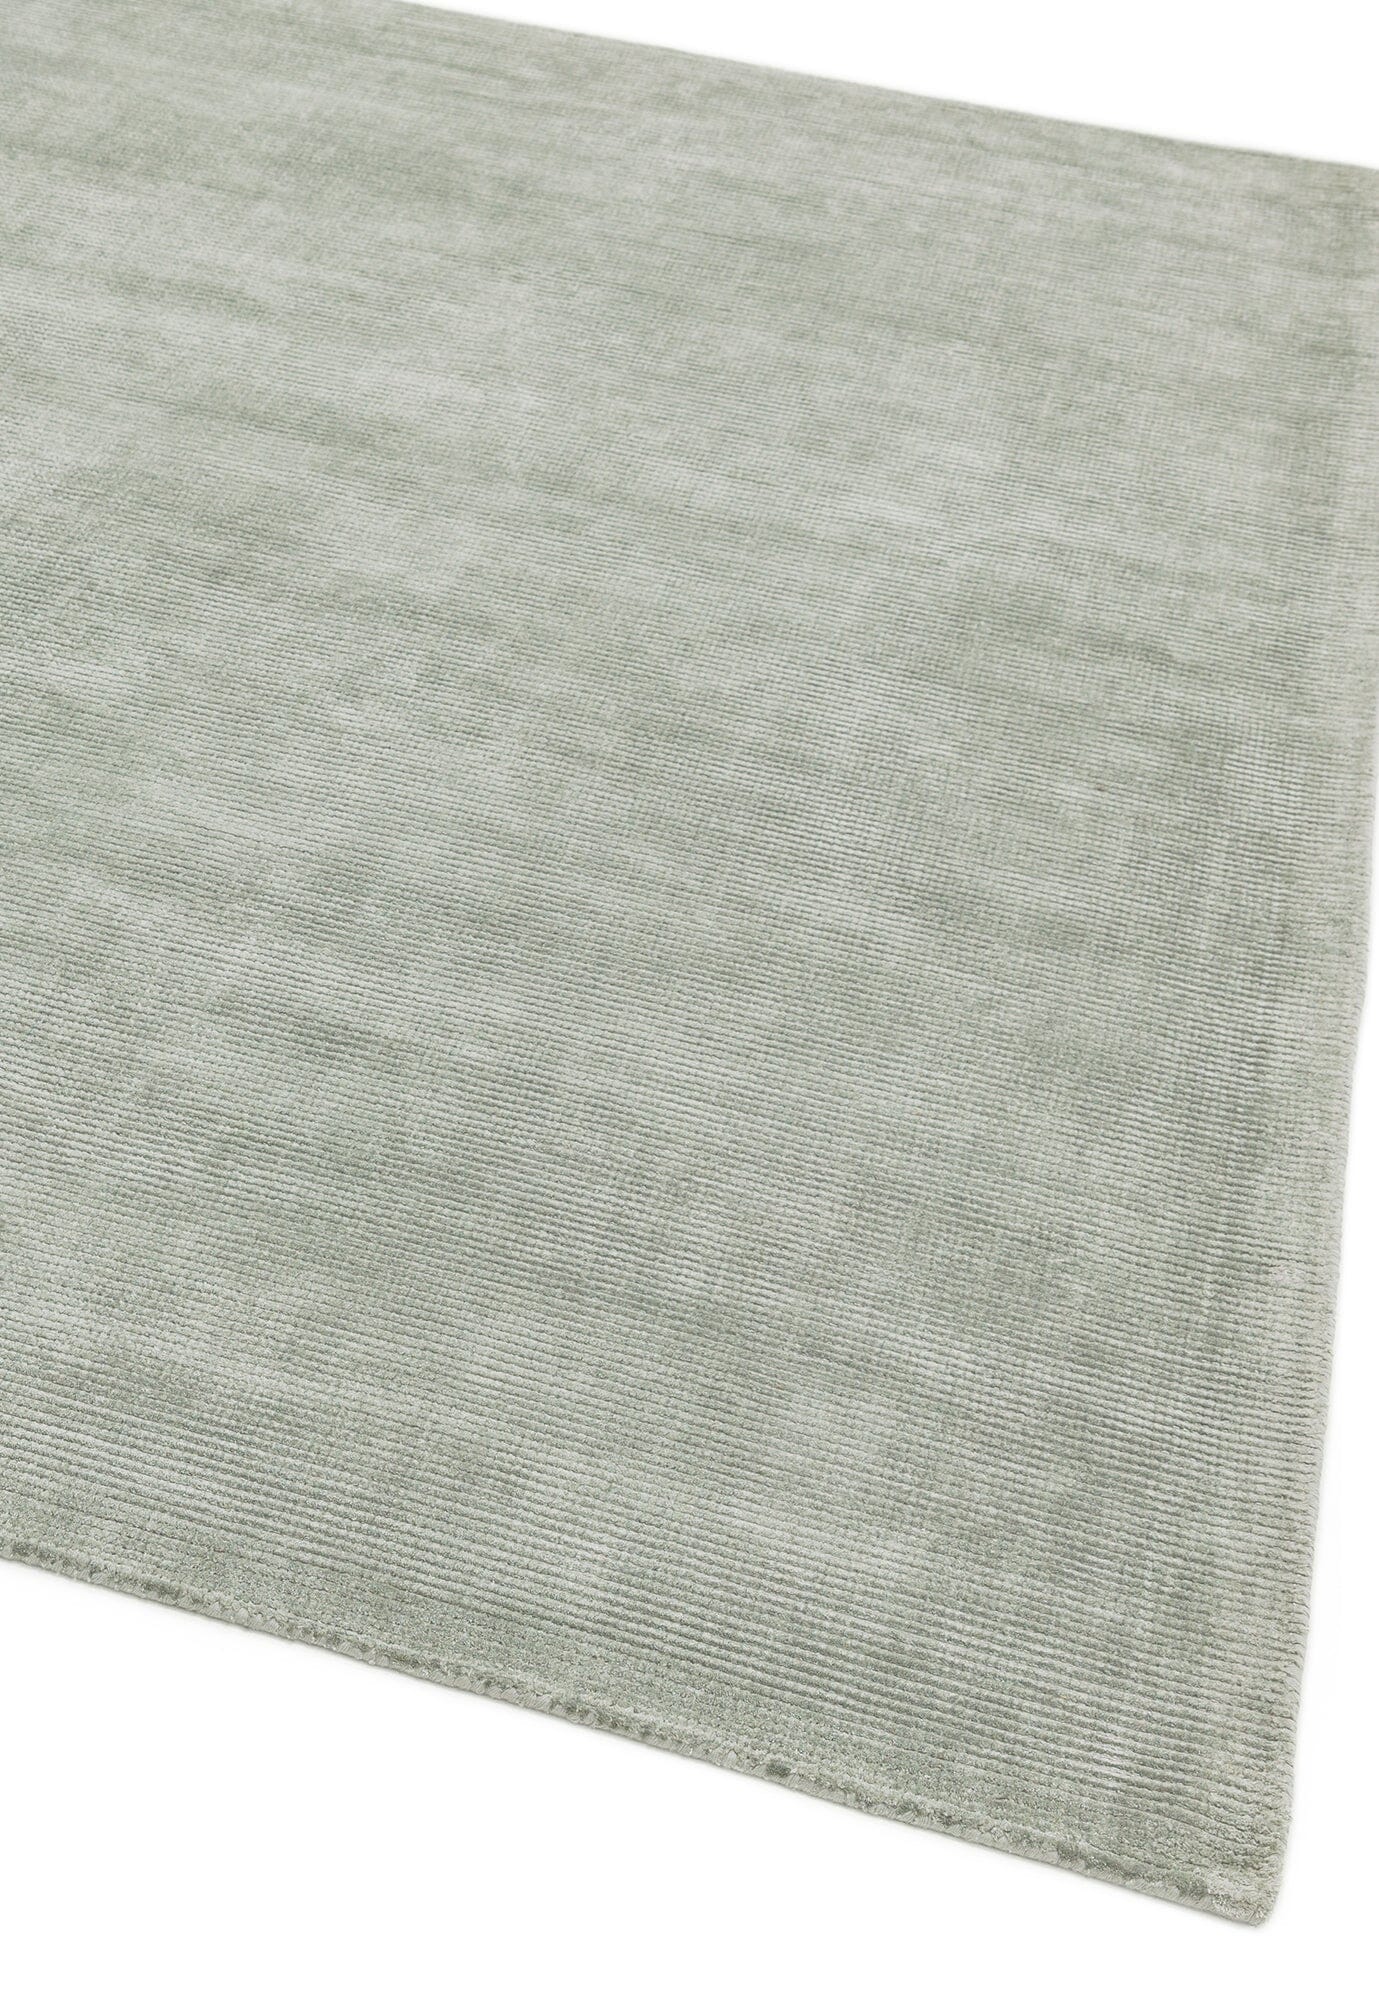 Reko French Grey Textured Rug